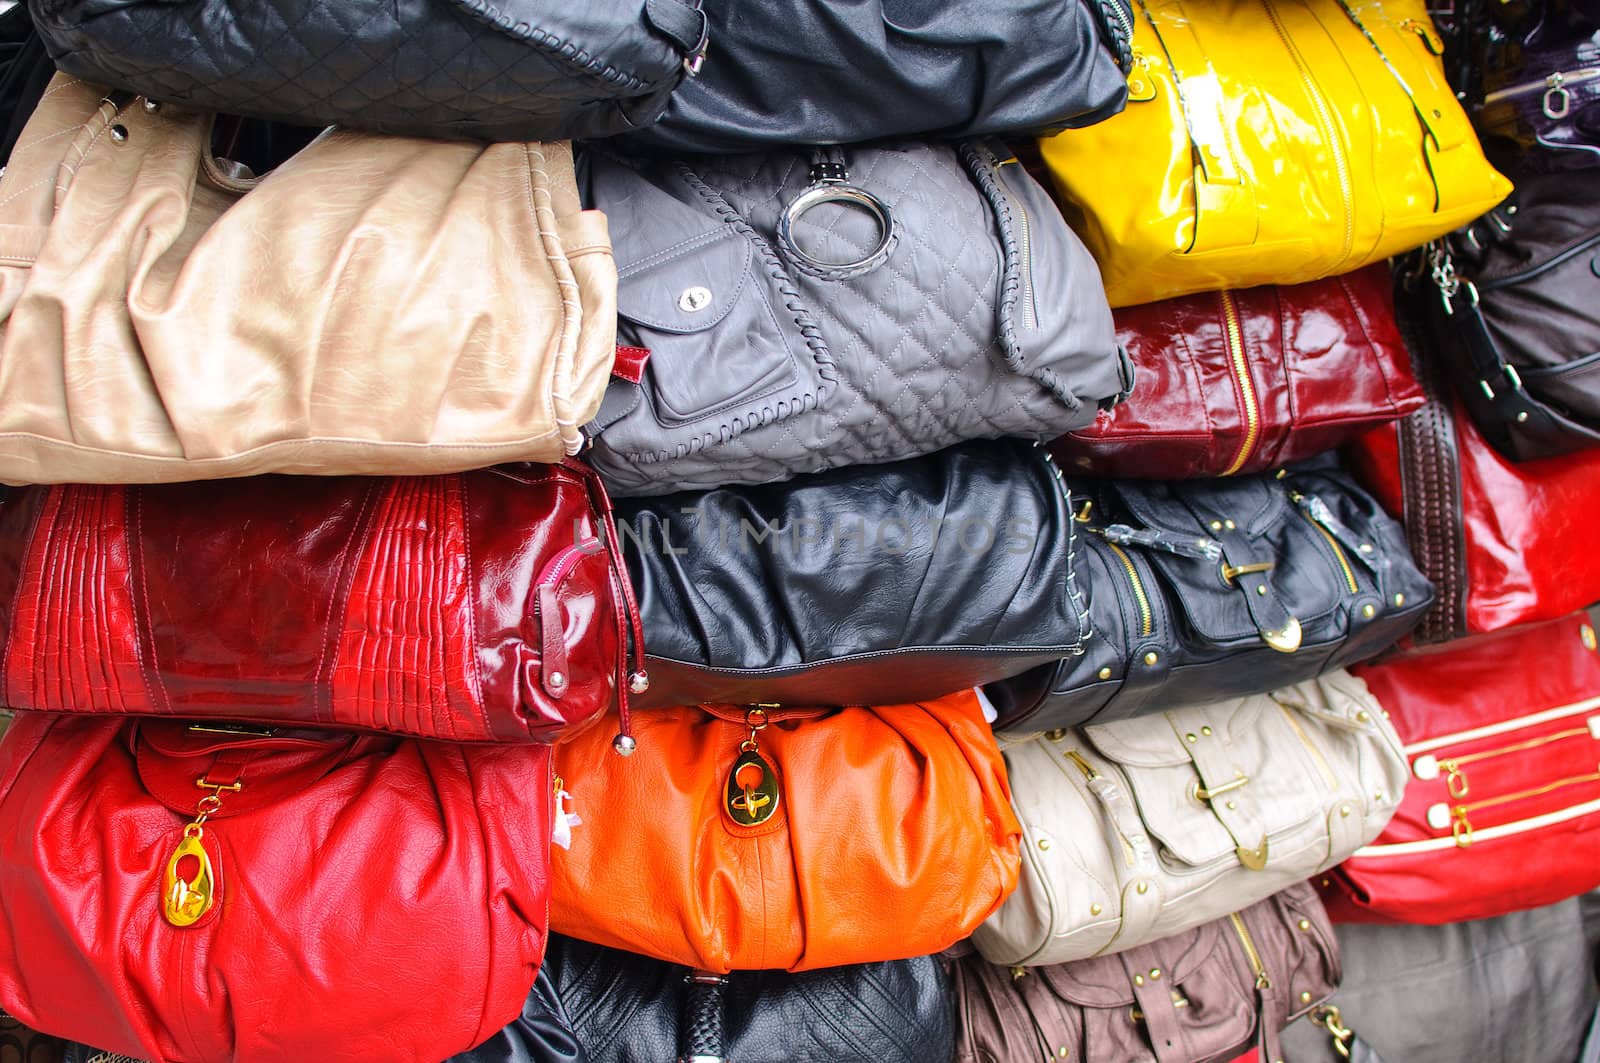 a display of various handbags.